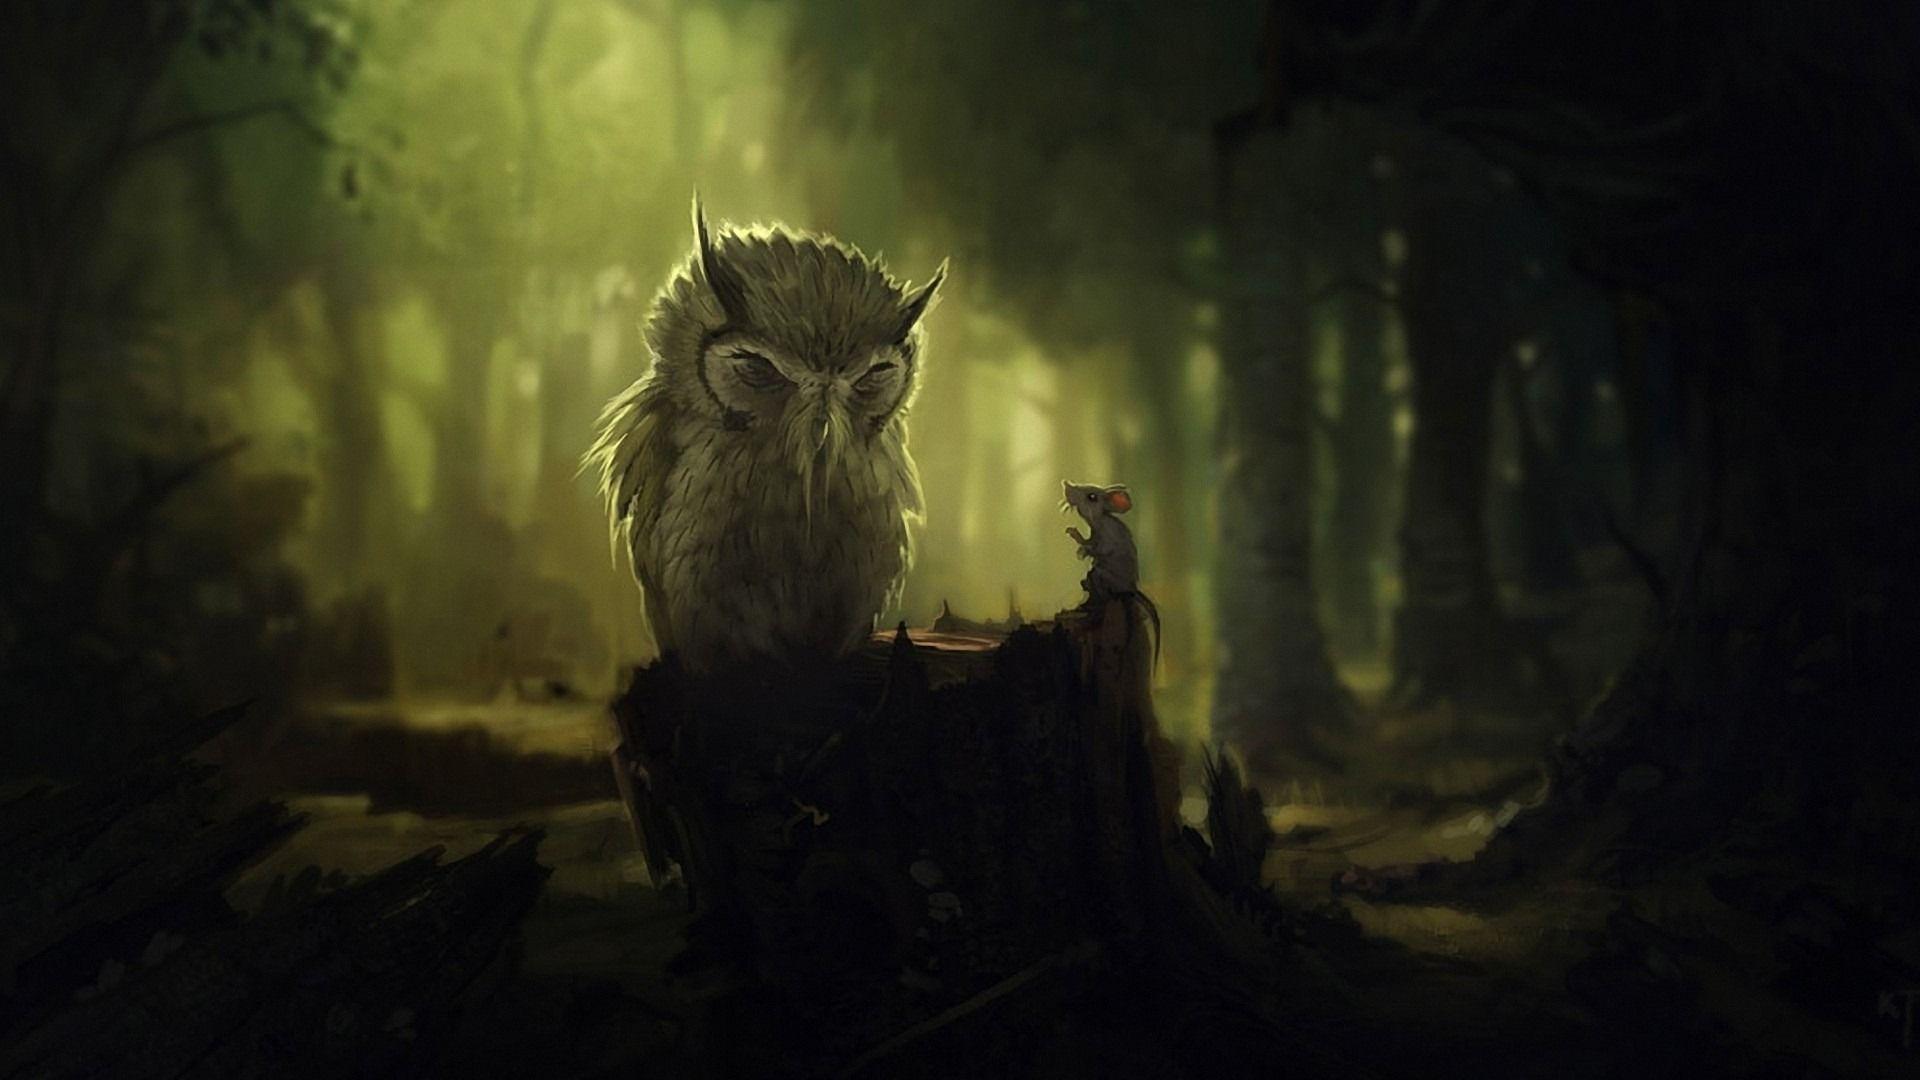 Wallpaper For > Owl Desktop Background